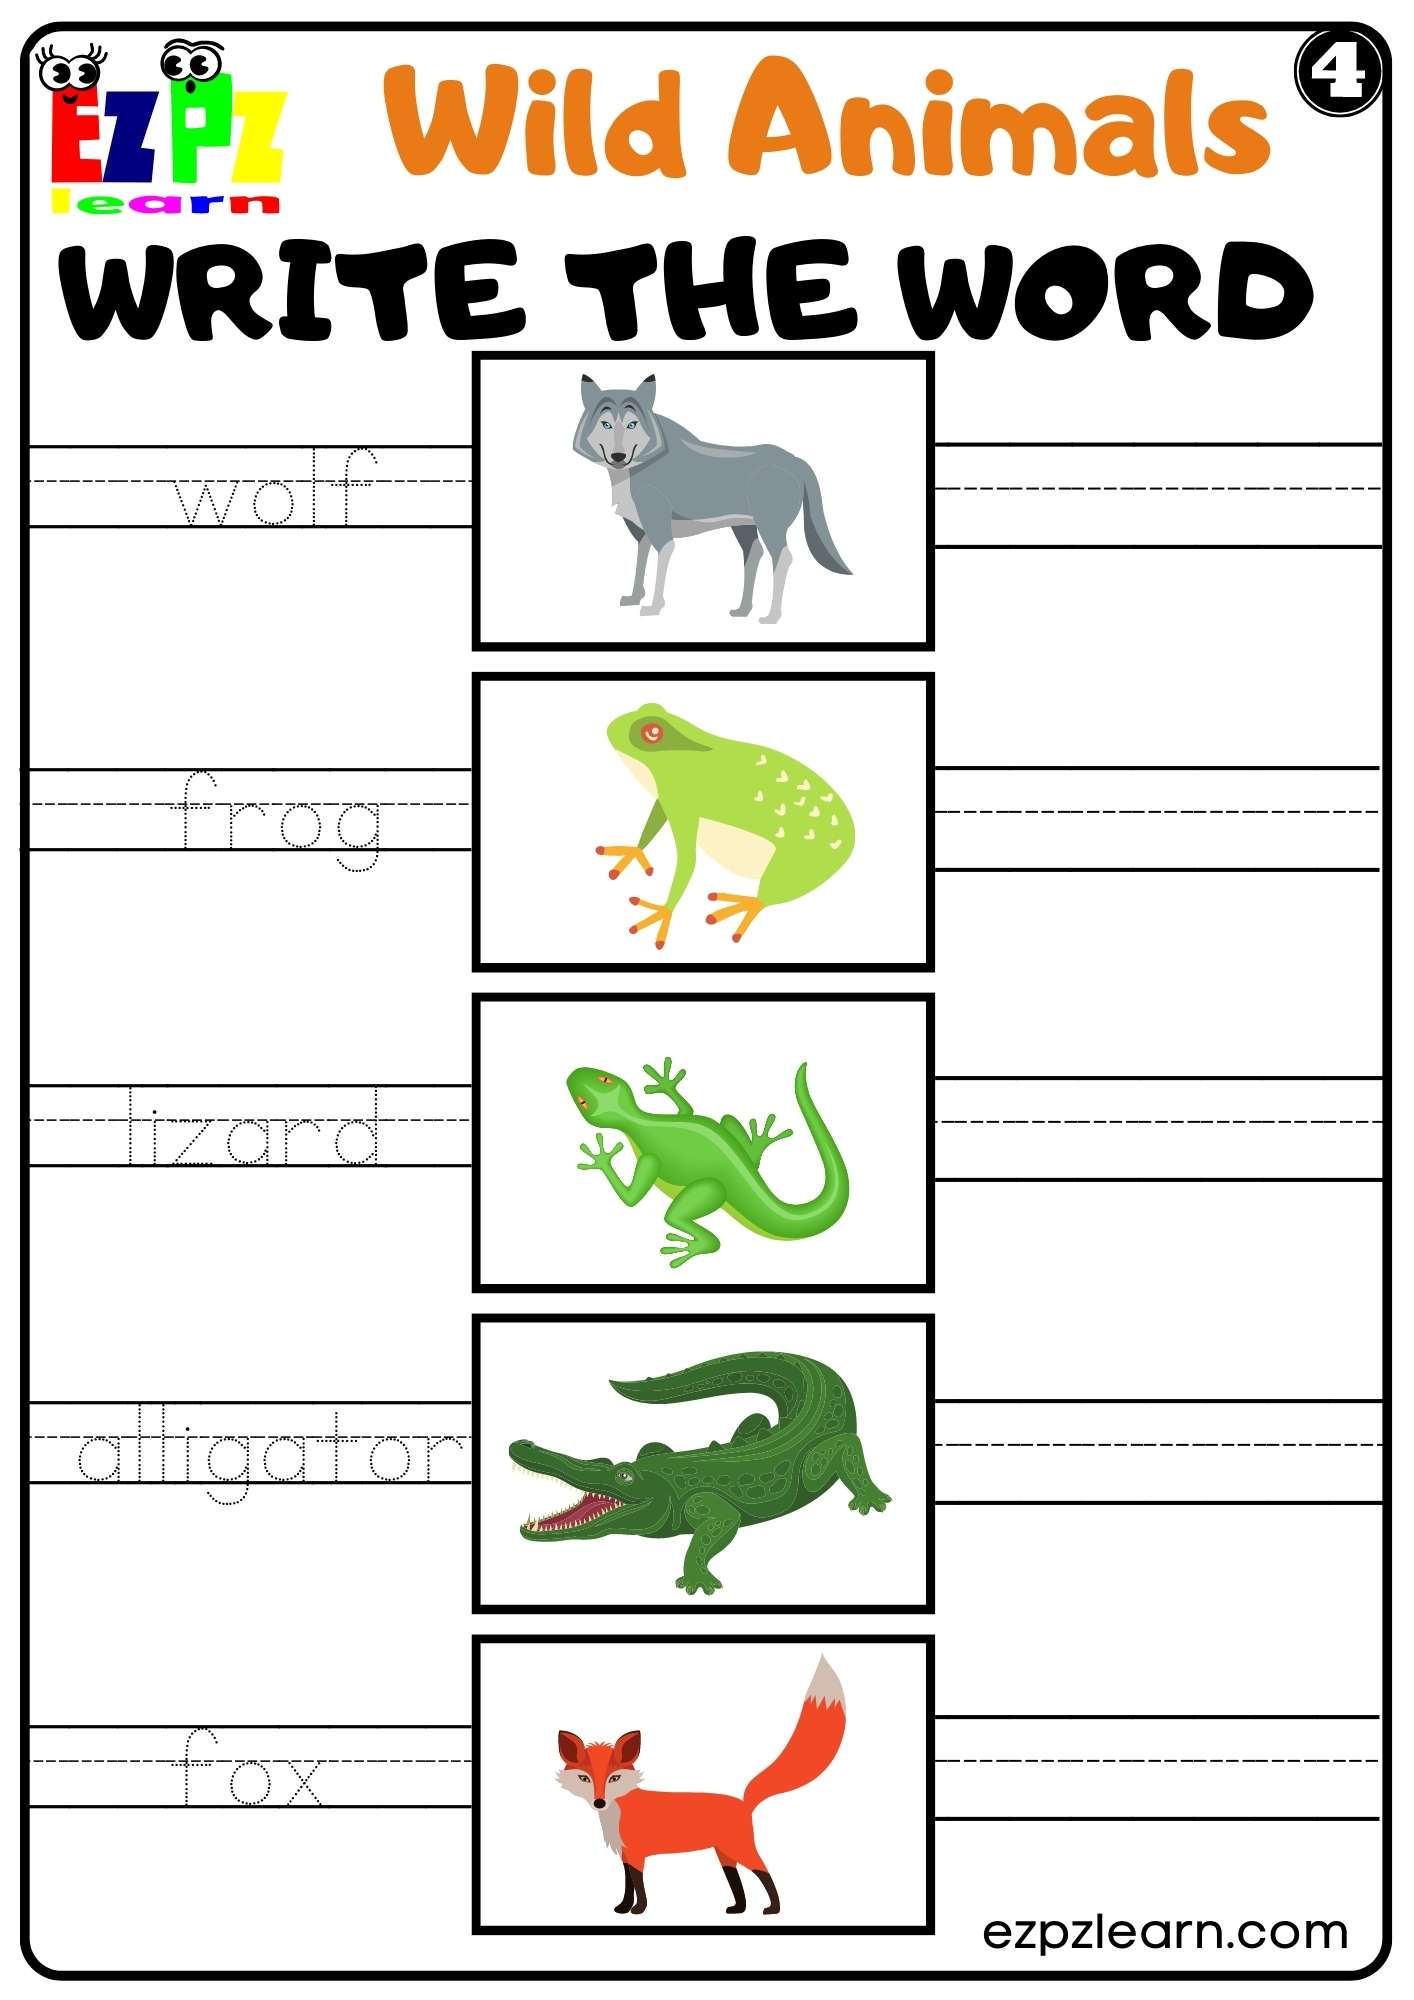 Wild Animals Write the Word Worksheet for Kids and ESL PDF Download Set 4 -  